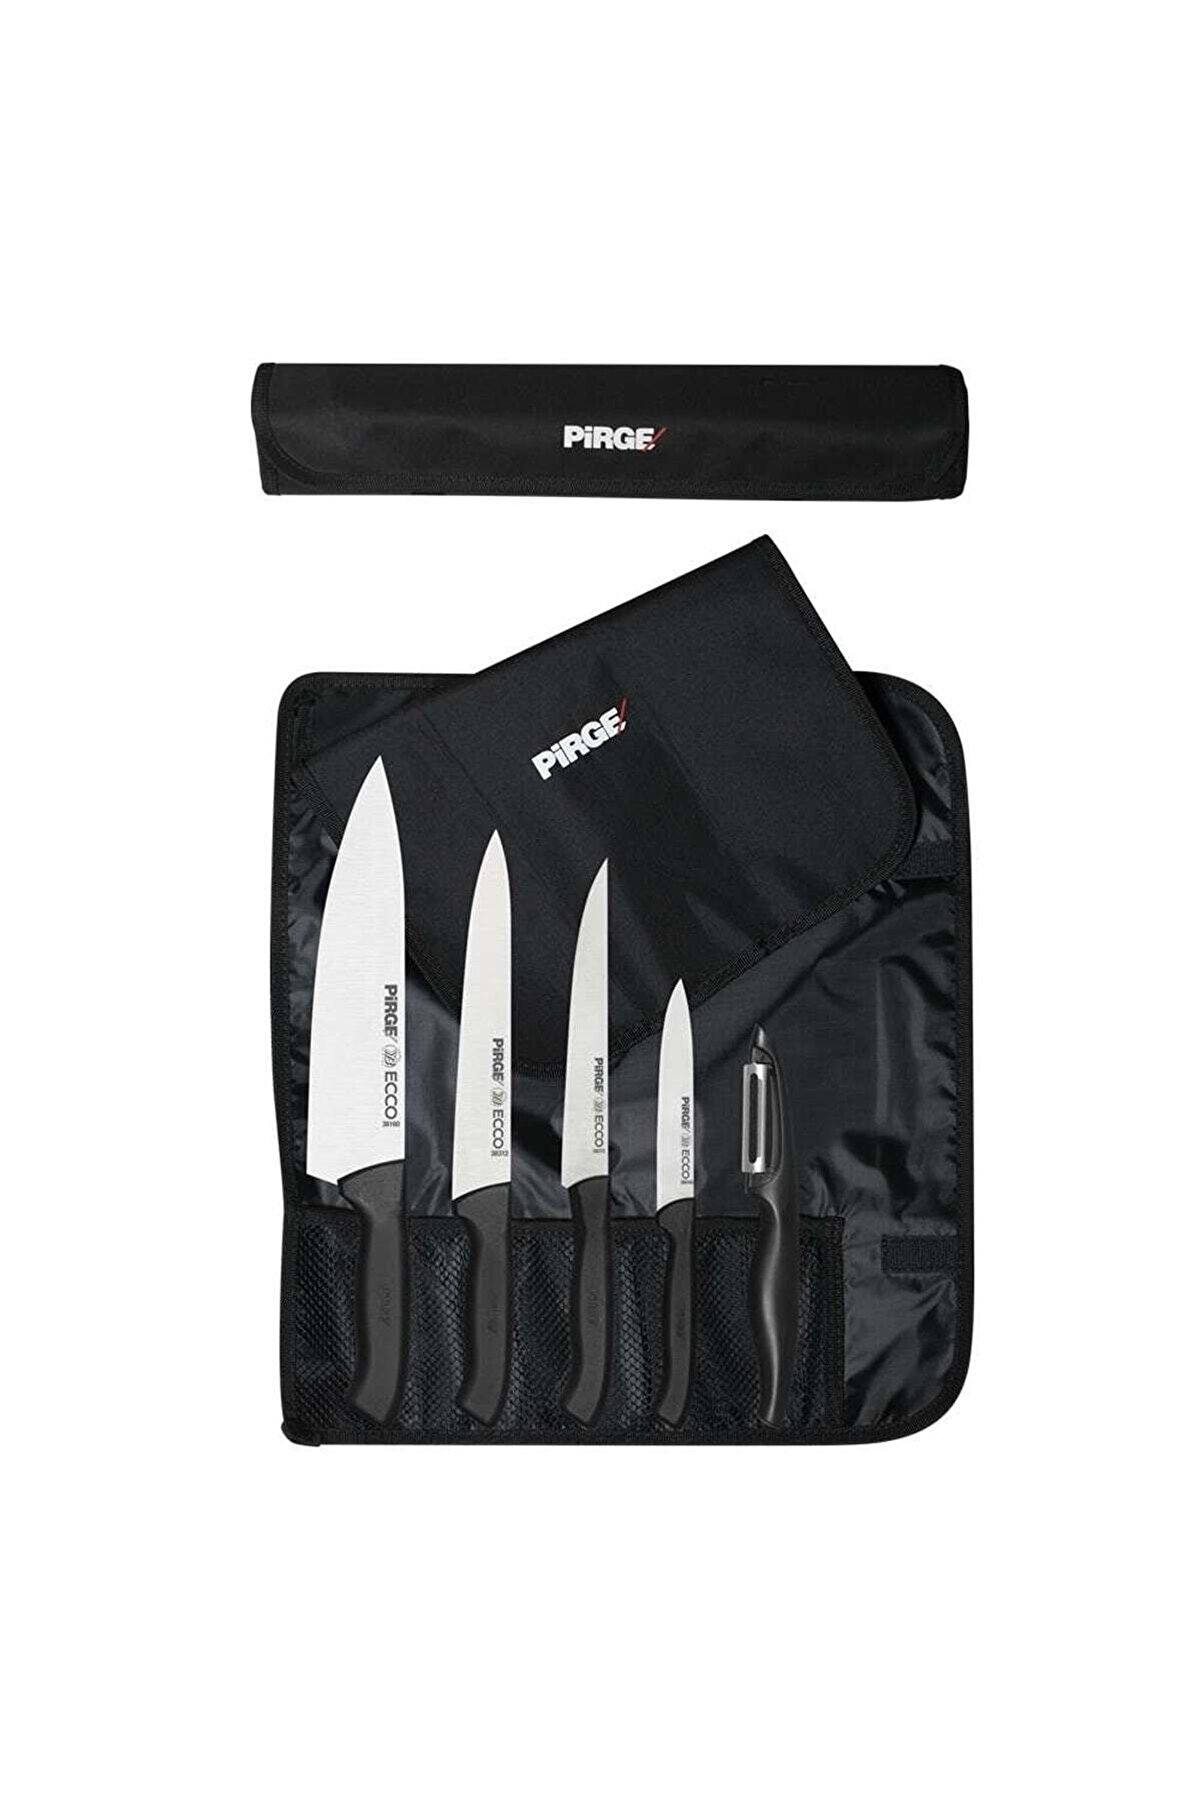 Pirge 38402 Ecco Çantalı Bıçak Seti